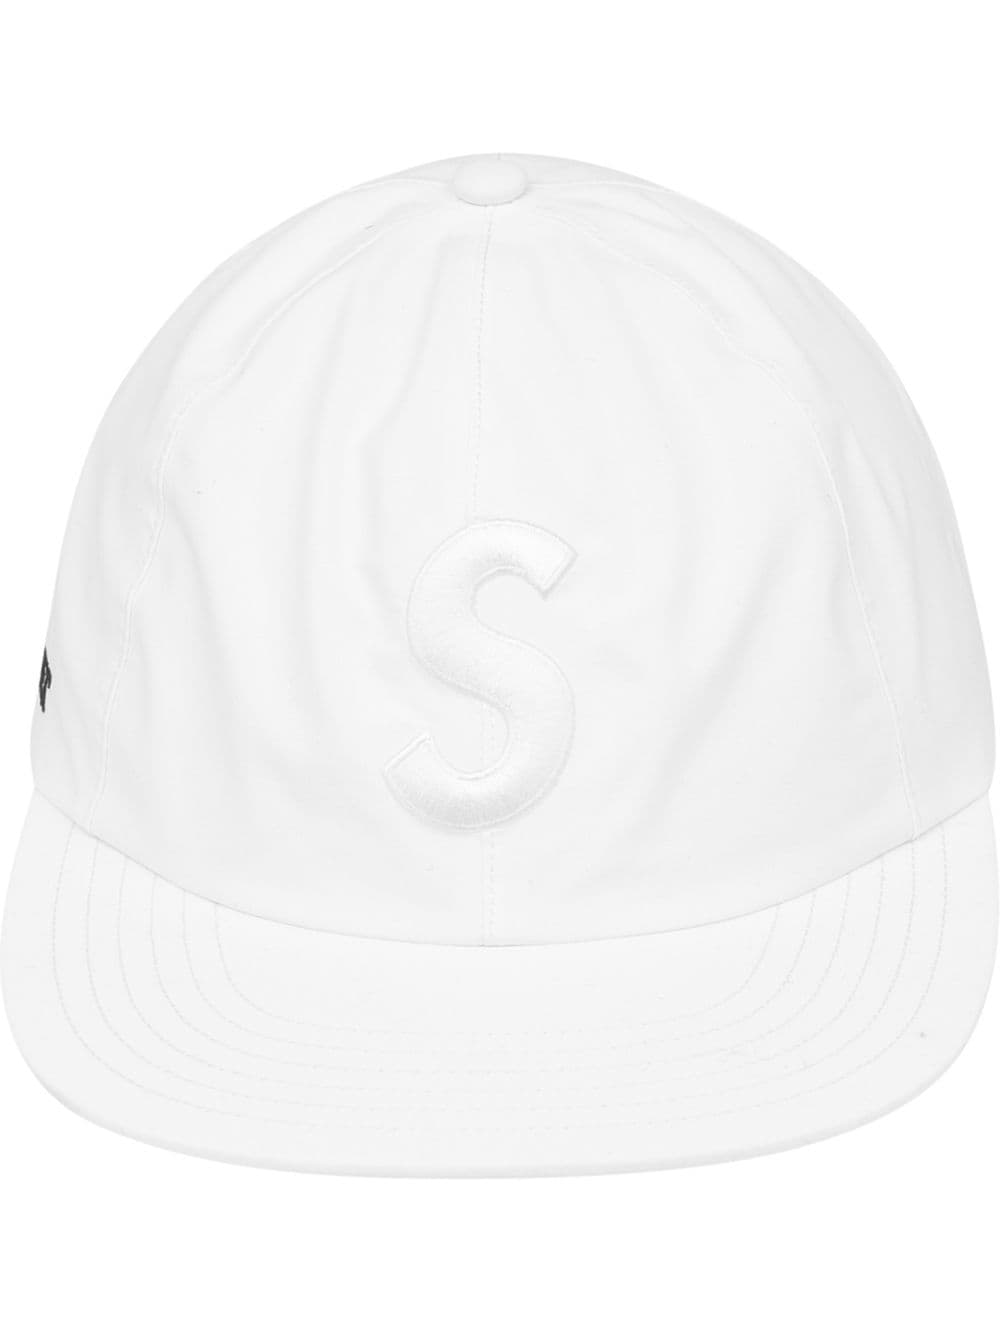 фото Supreme кепка с логотипом